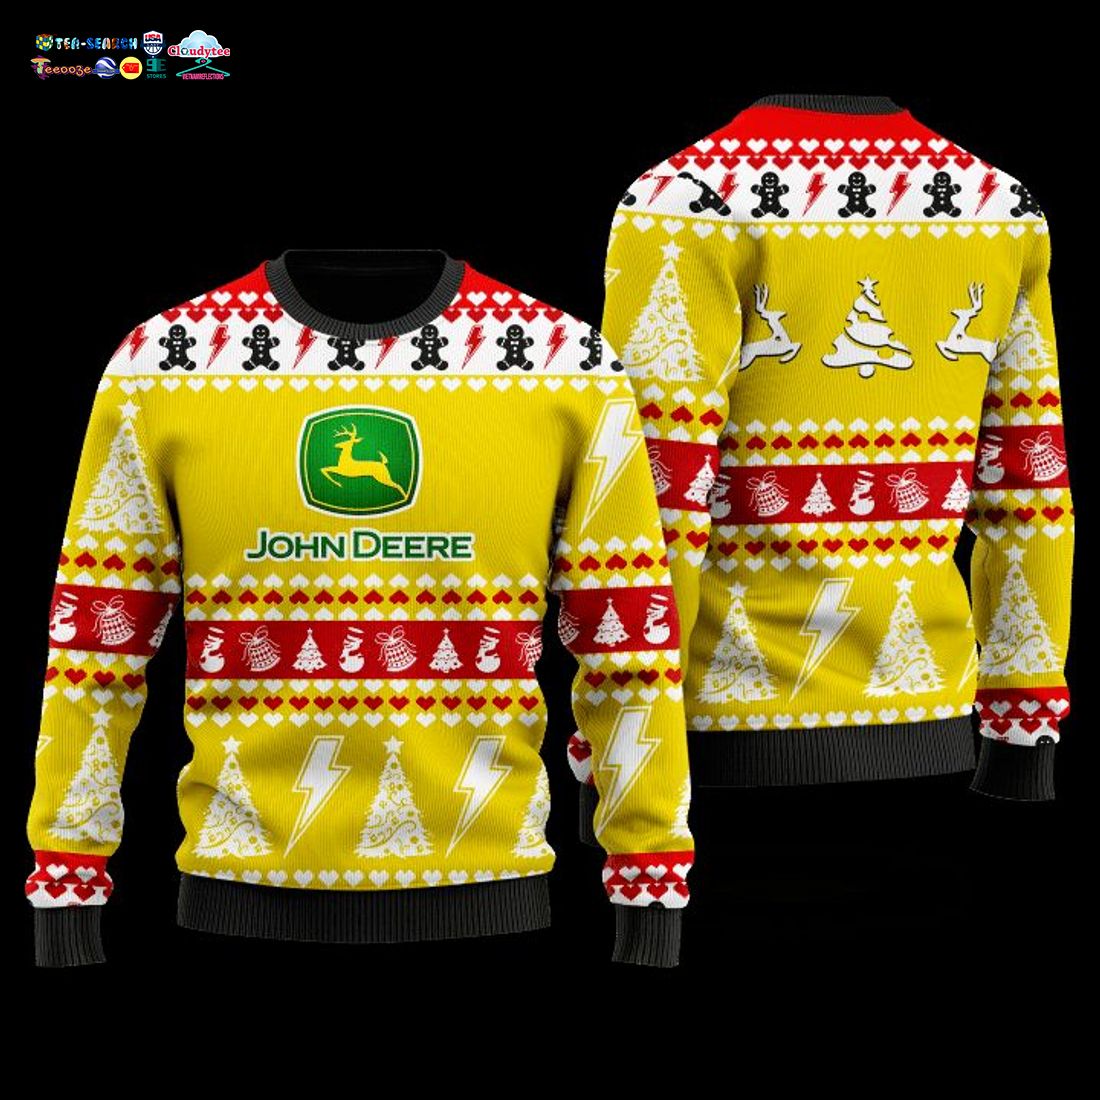 John Deere Ver 3 Ugly Christmas Sweater